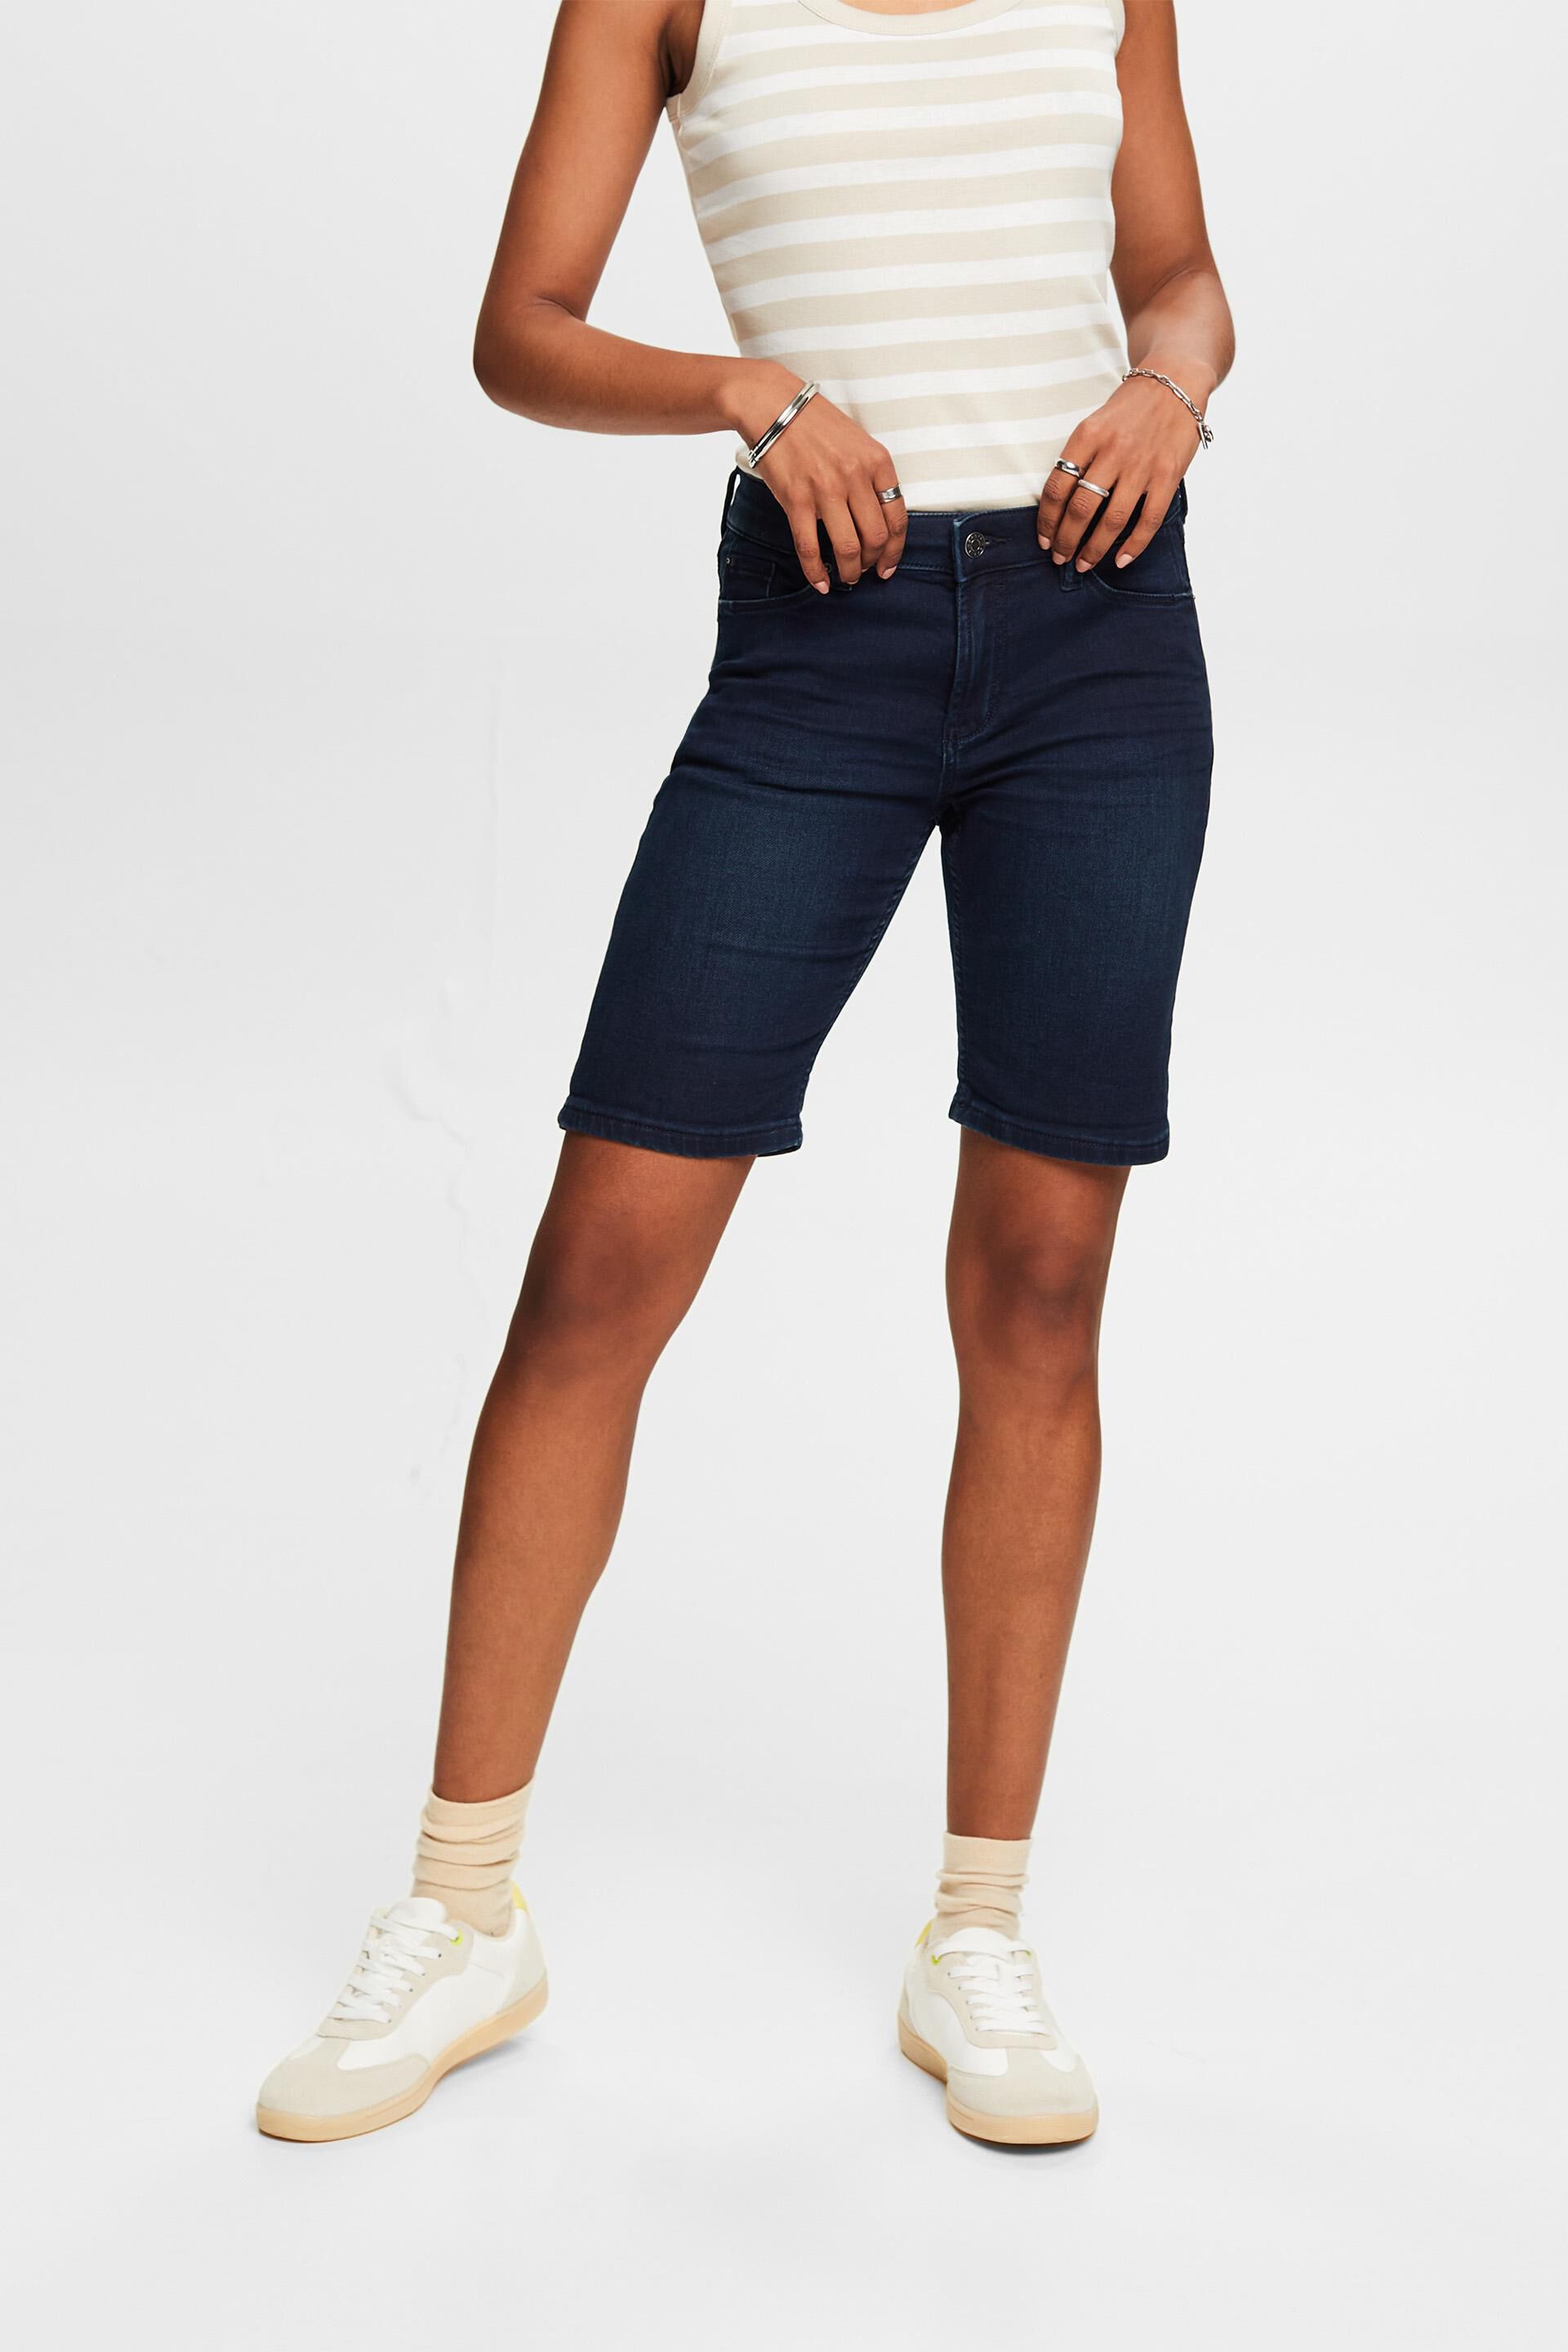 Buy RECAP Light Blue Denim Shorts for Women's Online @ Tata CLiQ